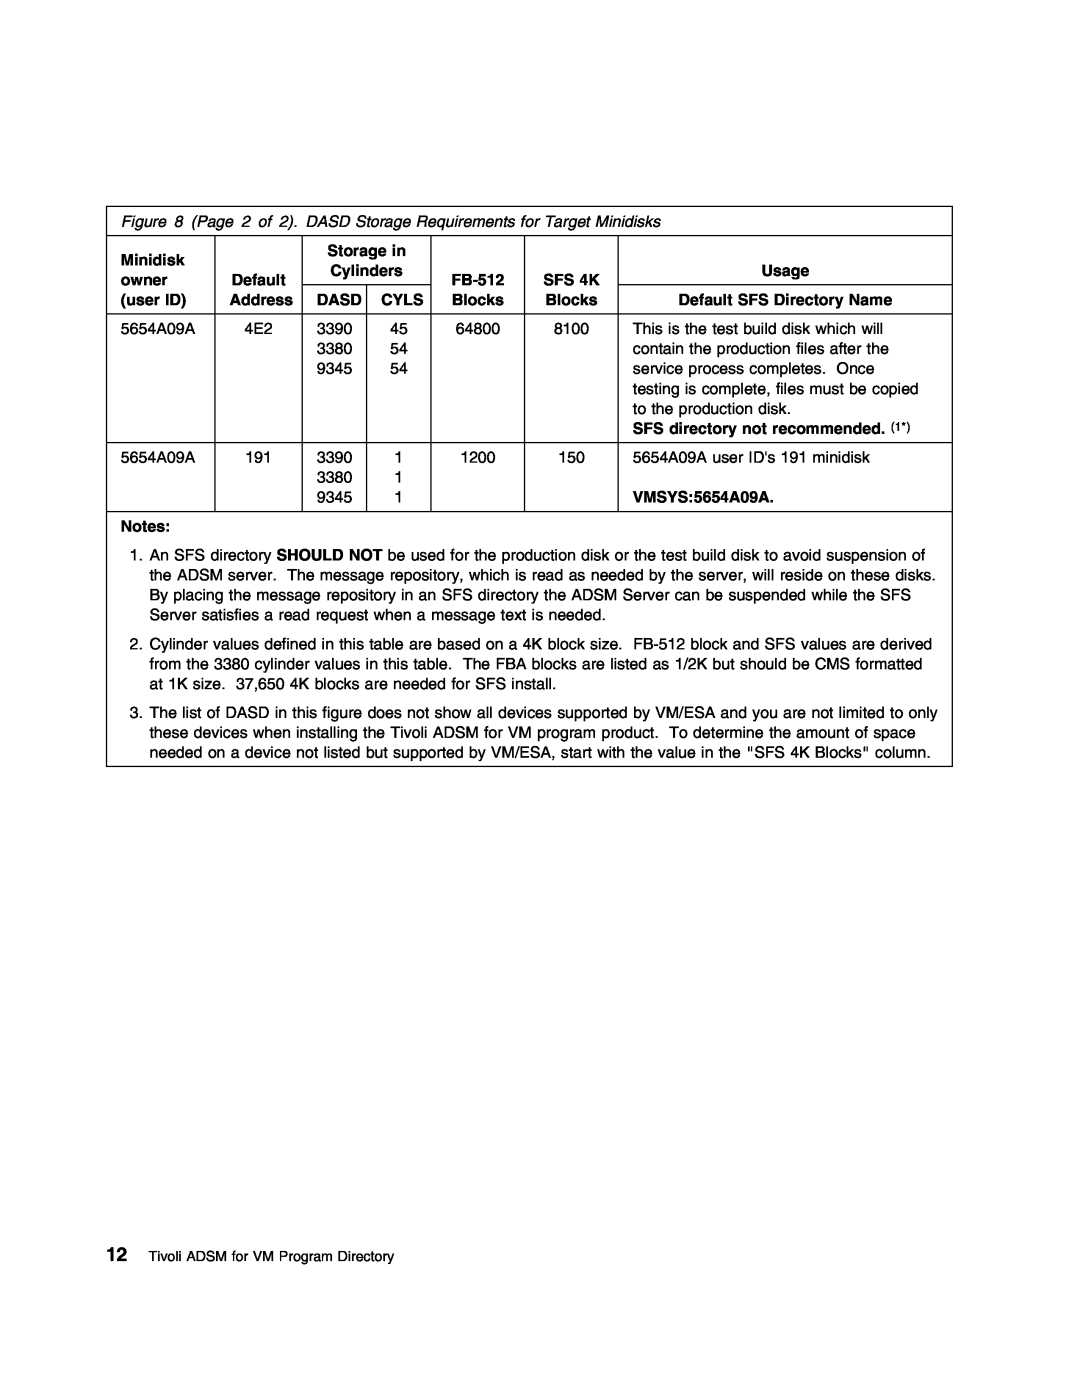 IBM 5697-VM3 manual Page 2 of 2. DASD Storage Requirements for Target Minidisks, Tivoli ADSM for VM Program Directory 